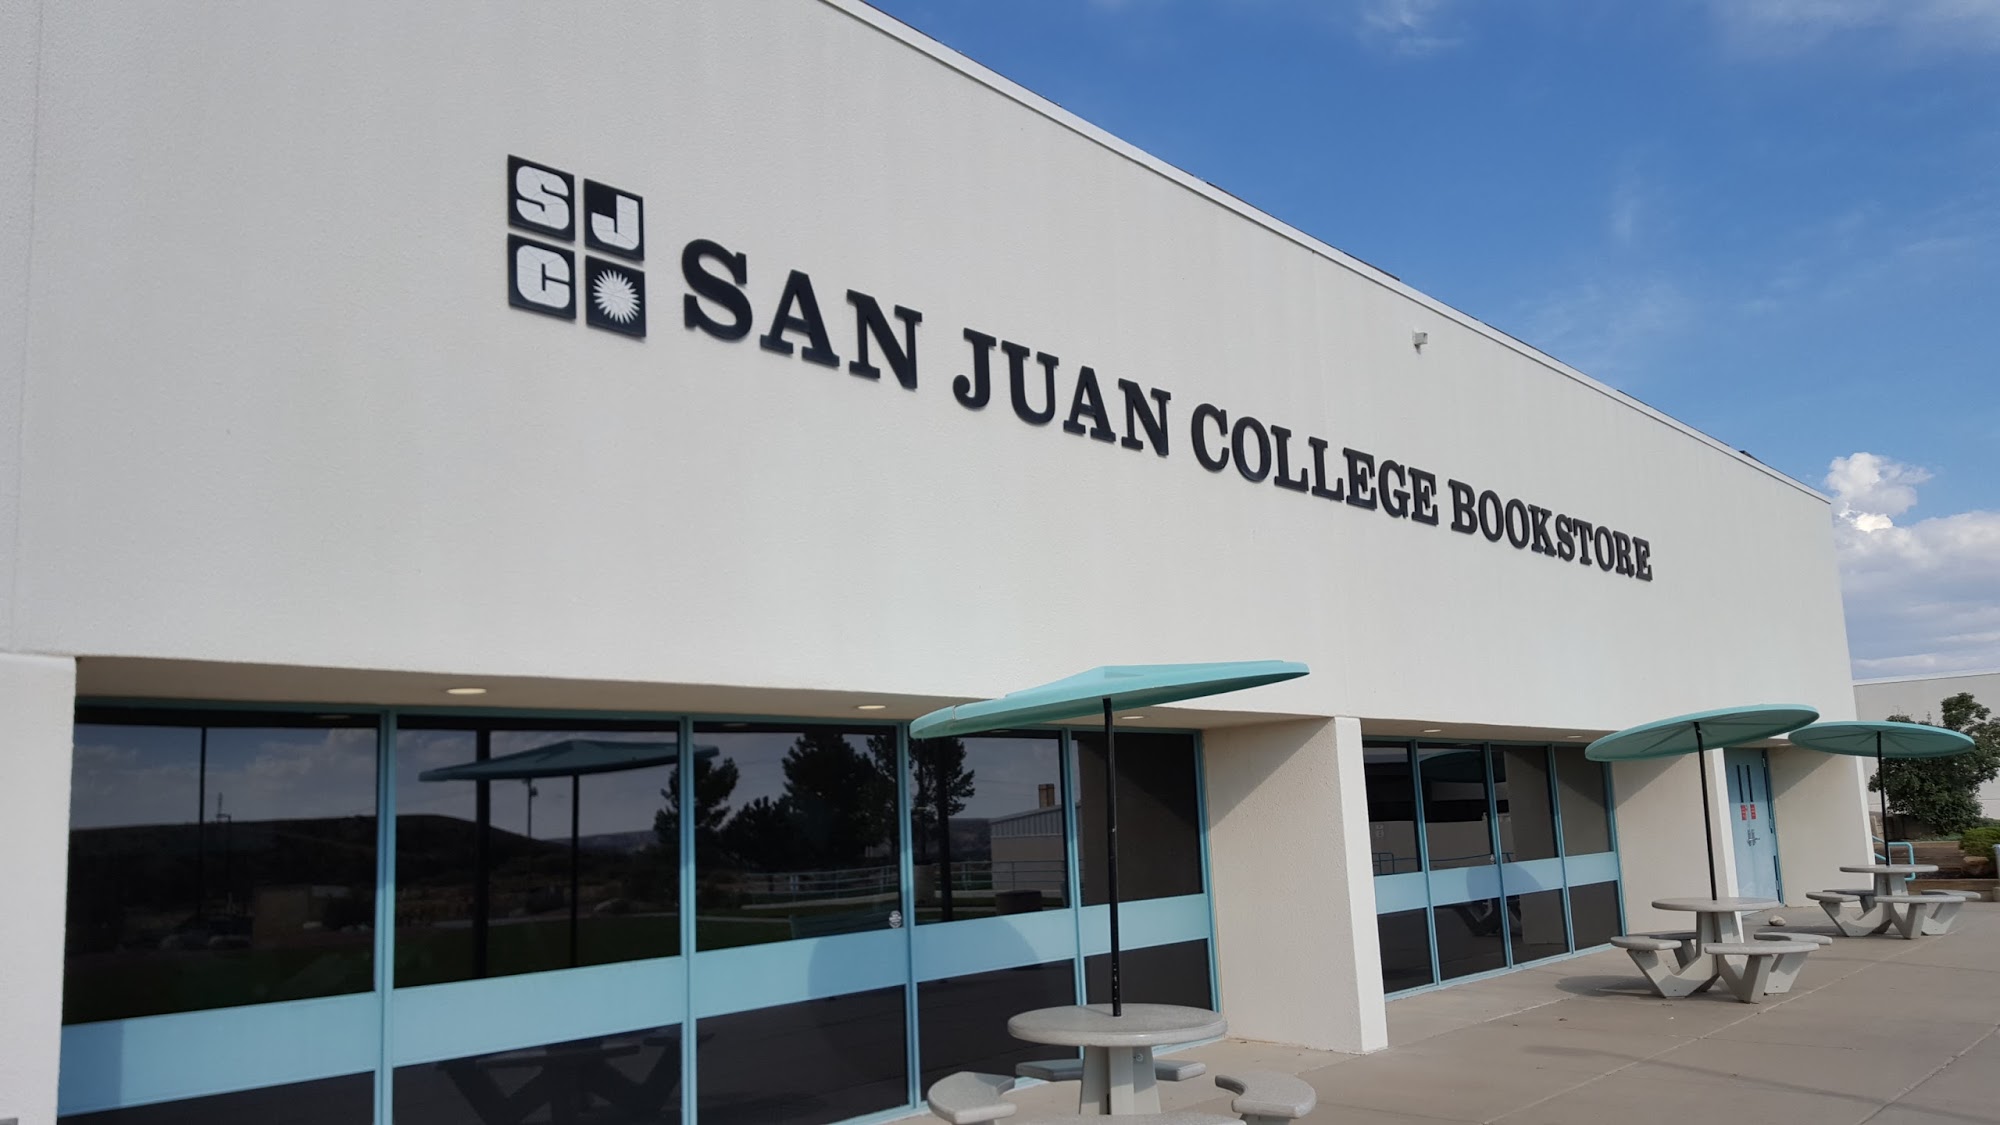 San Juan College Bookstore